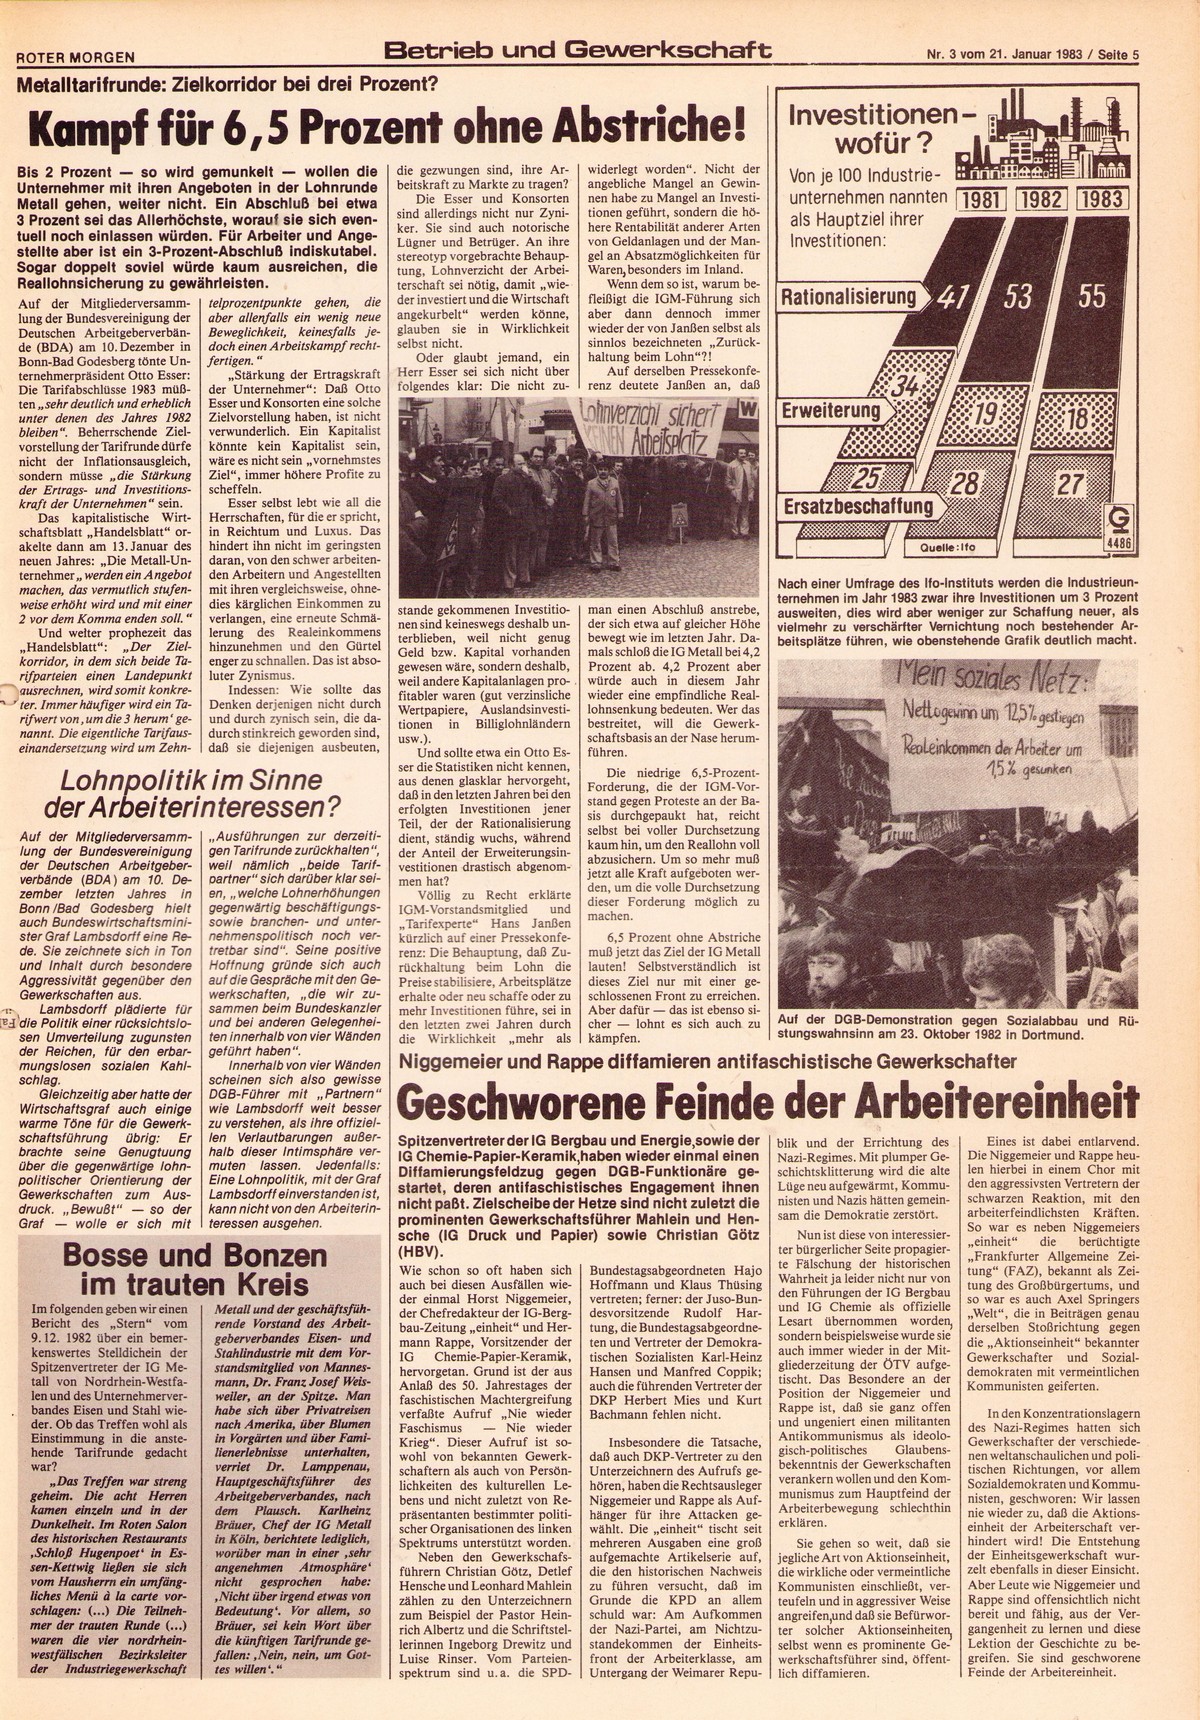 Roter Morgen, 17. Jg., 22. Januar 1983, Nr. 3, Seite 5